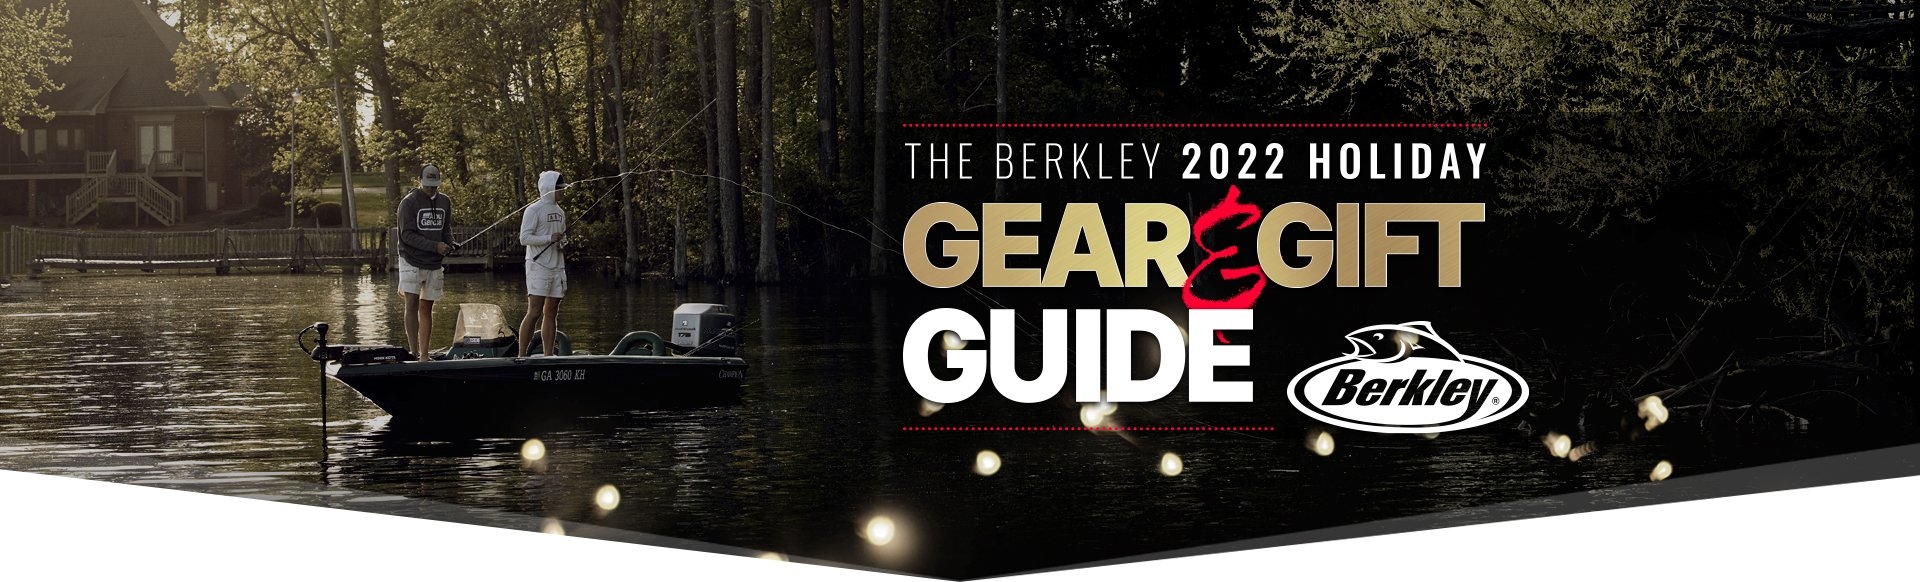 The Abu Garcia 2022 Holiday Gear & Gift Guide